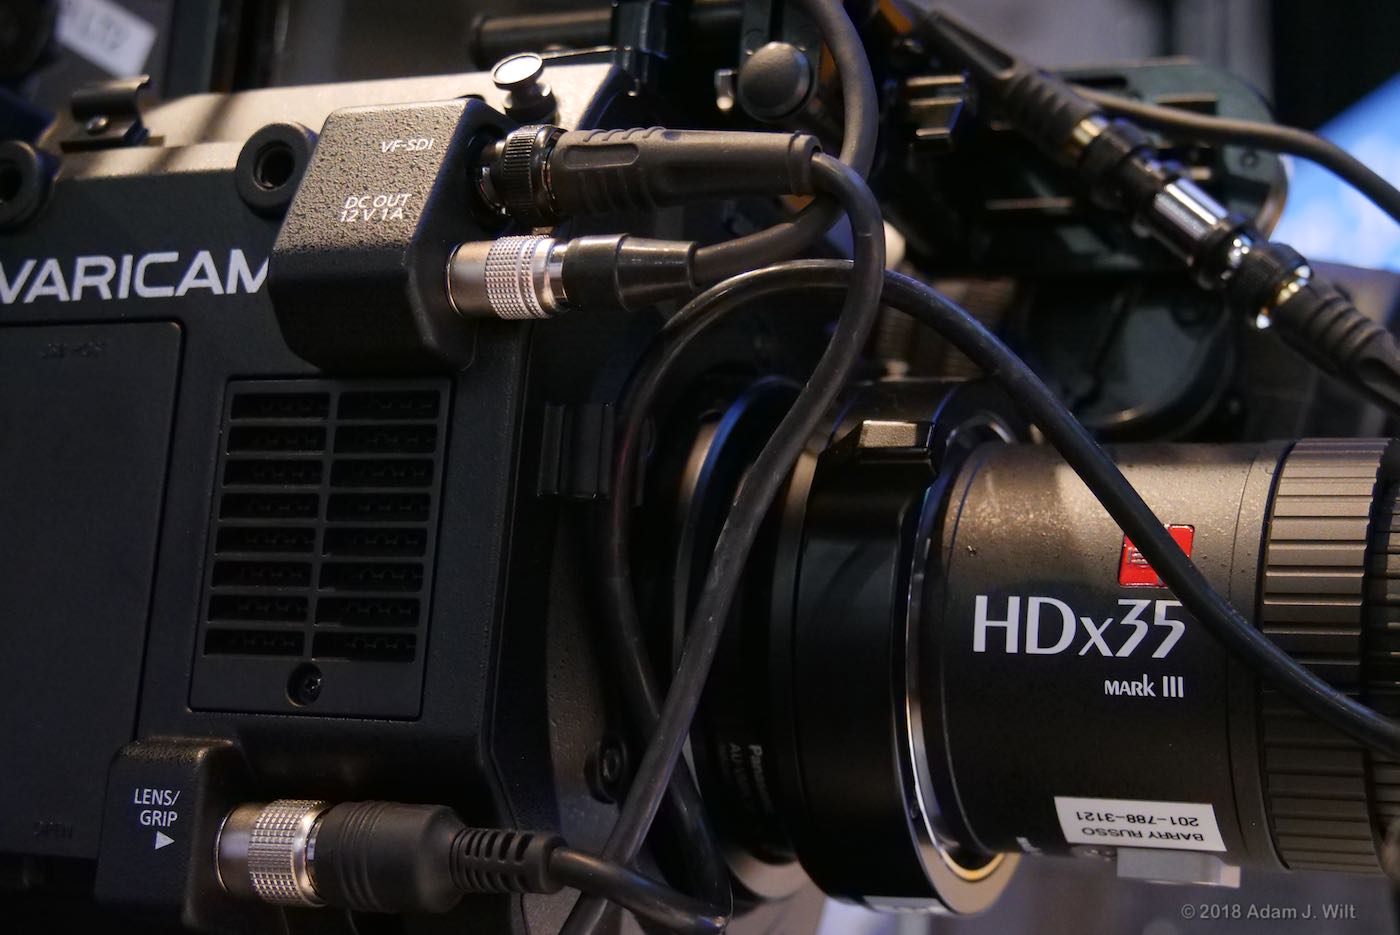 HDx35 adapter on VariCam